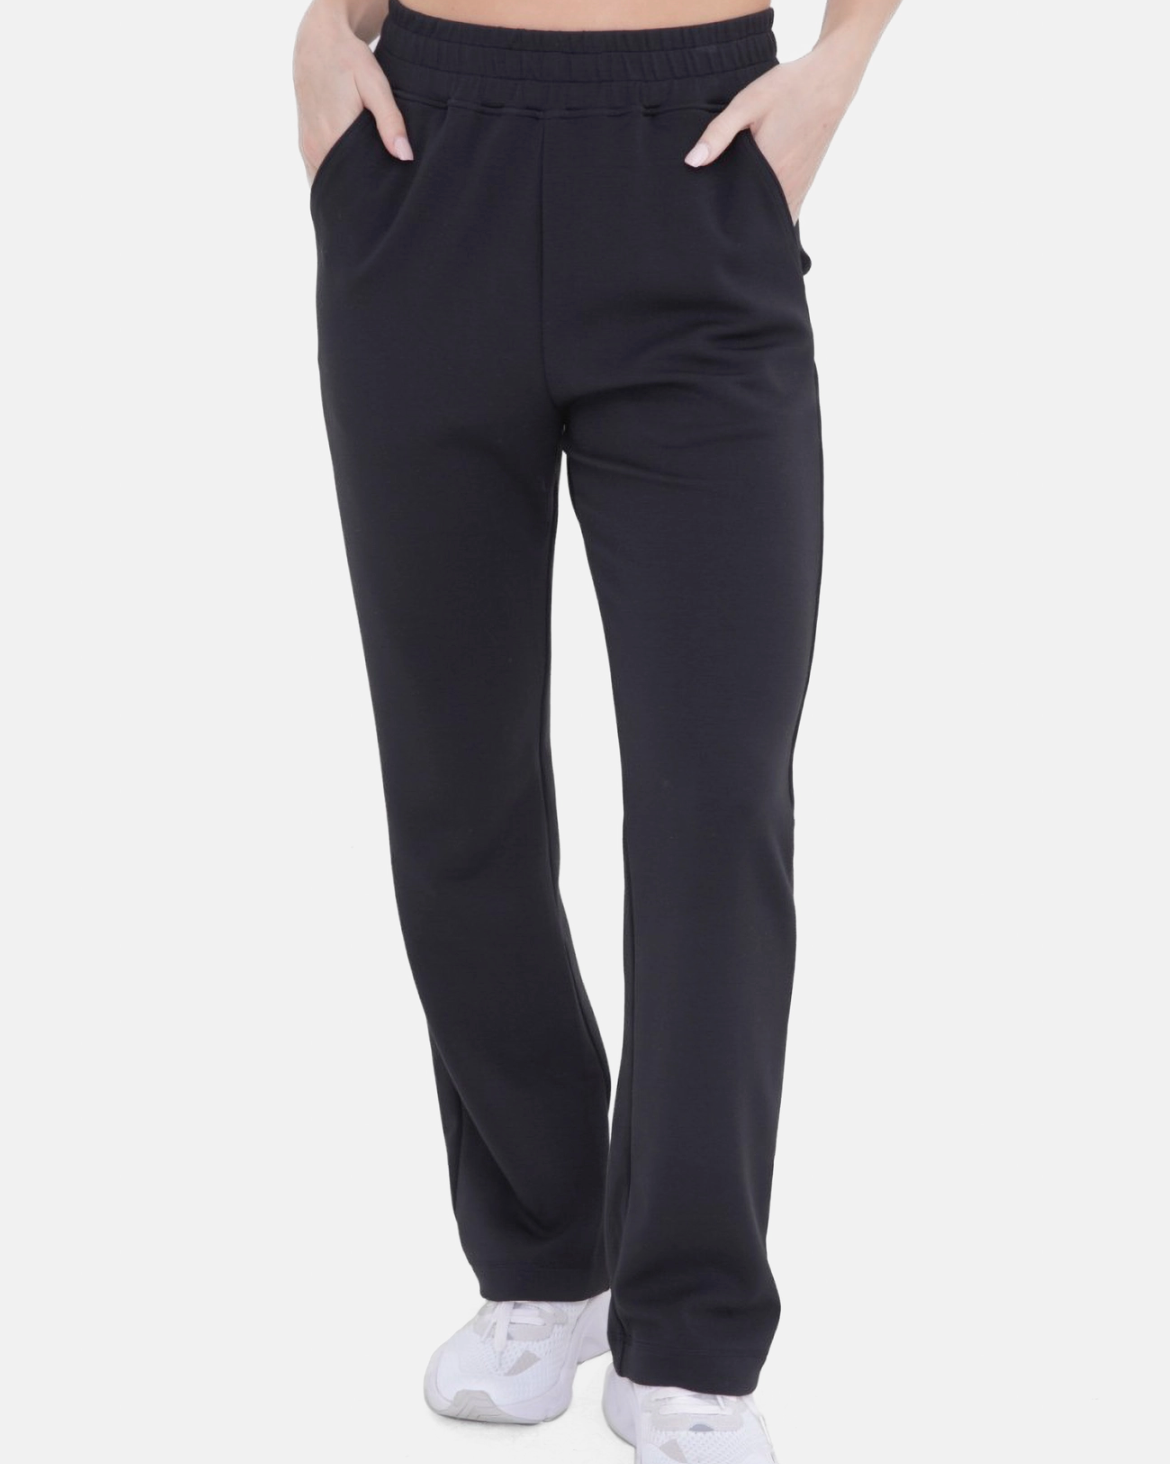 Modal Blend High-Waist Pants in Black - The Street Boutique 